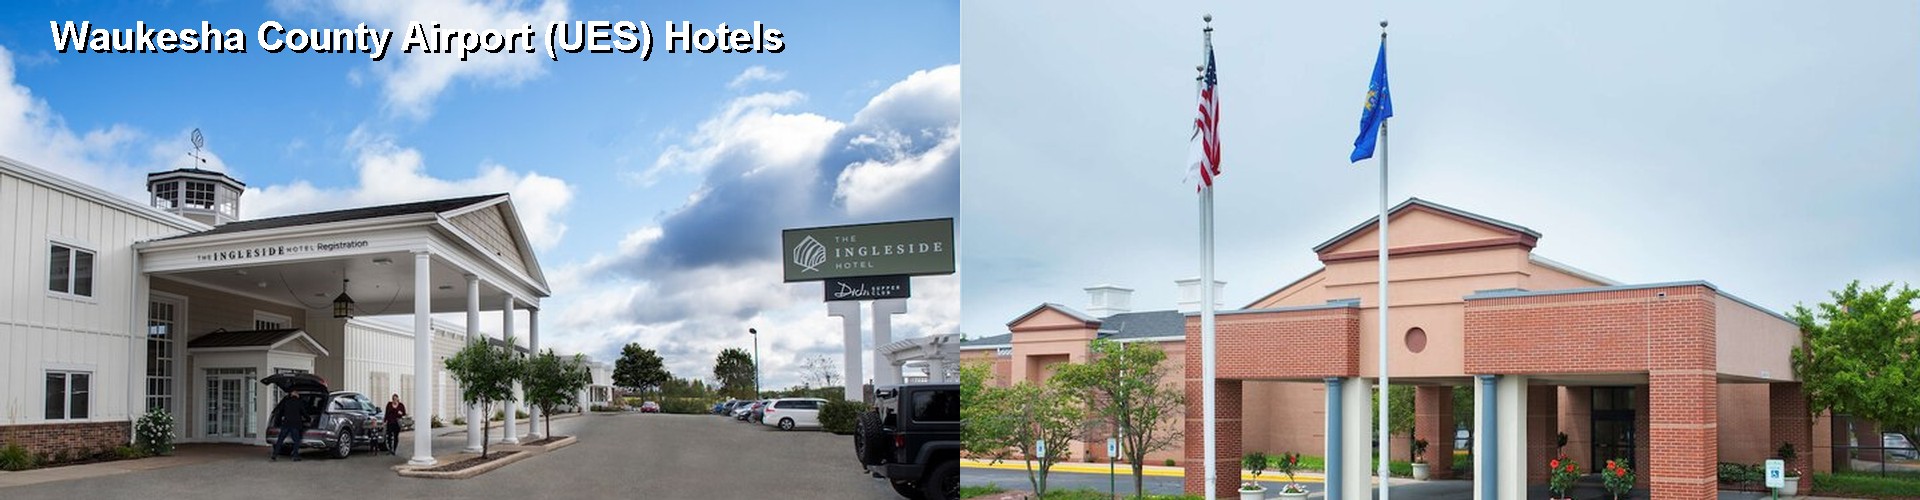 5 Best Hotels near Waukesha County Airport (UES)